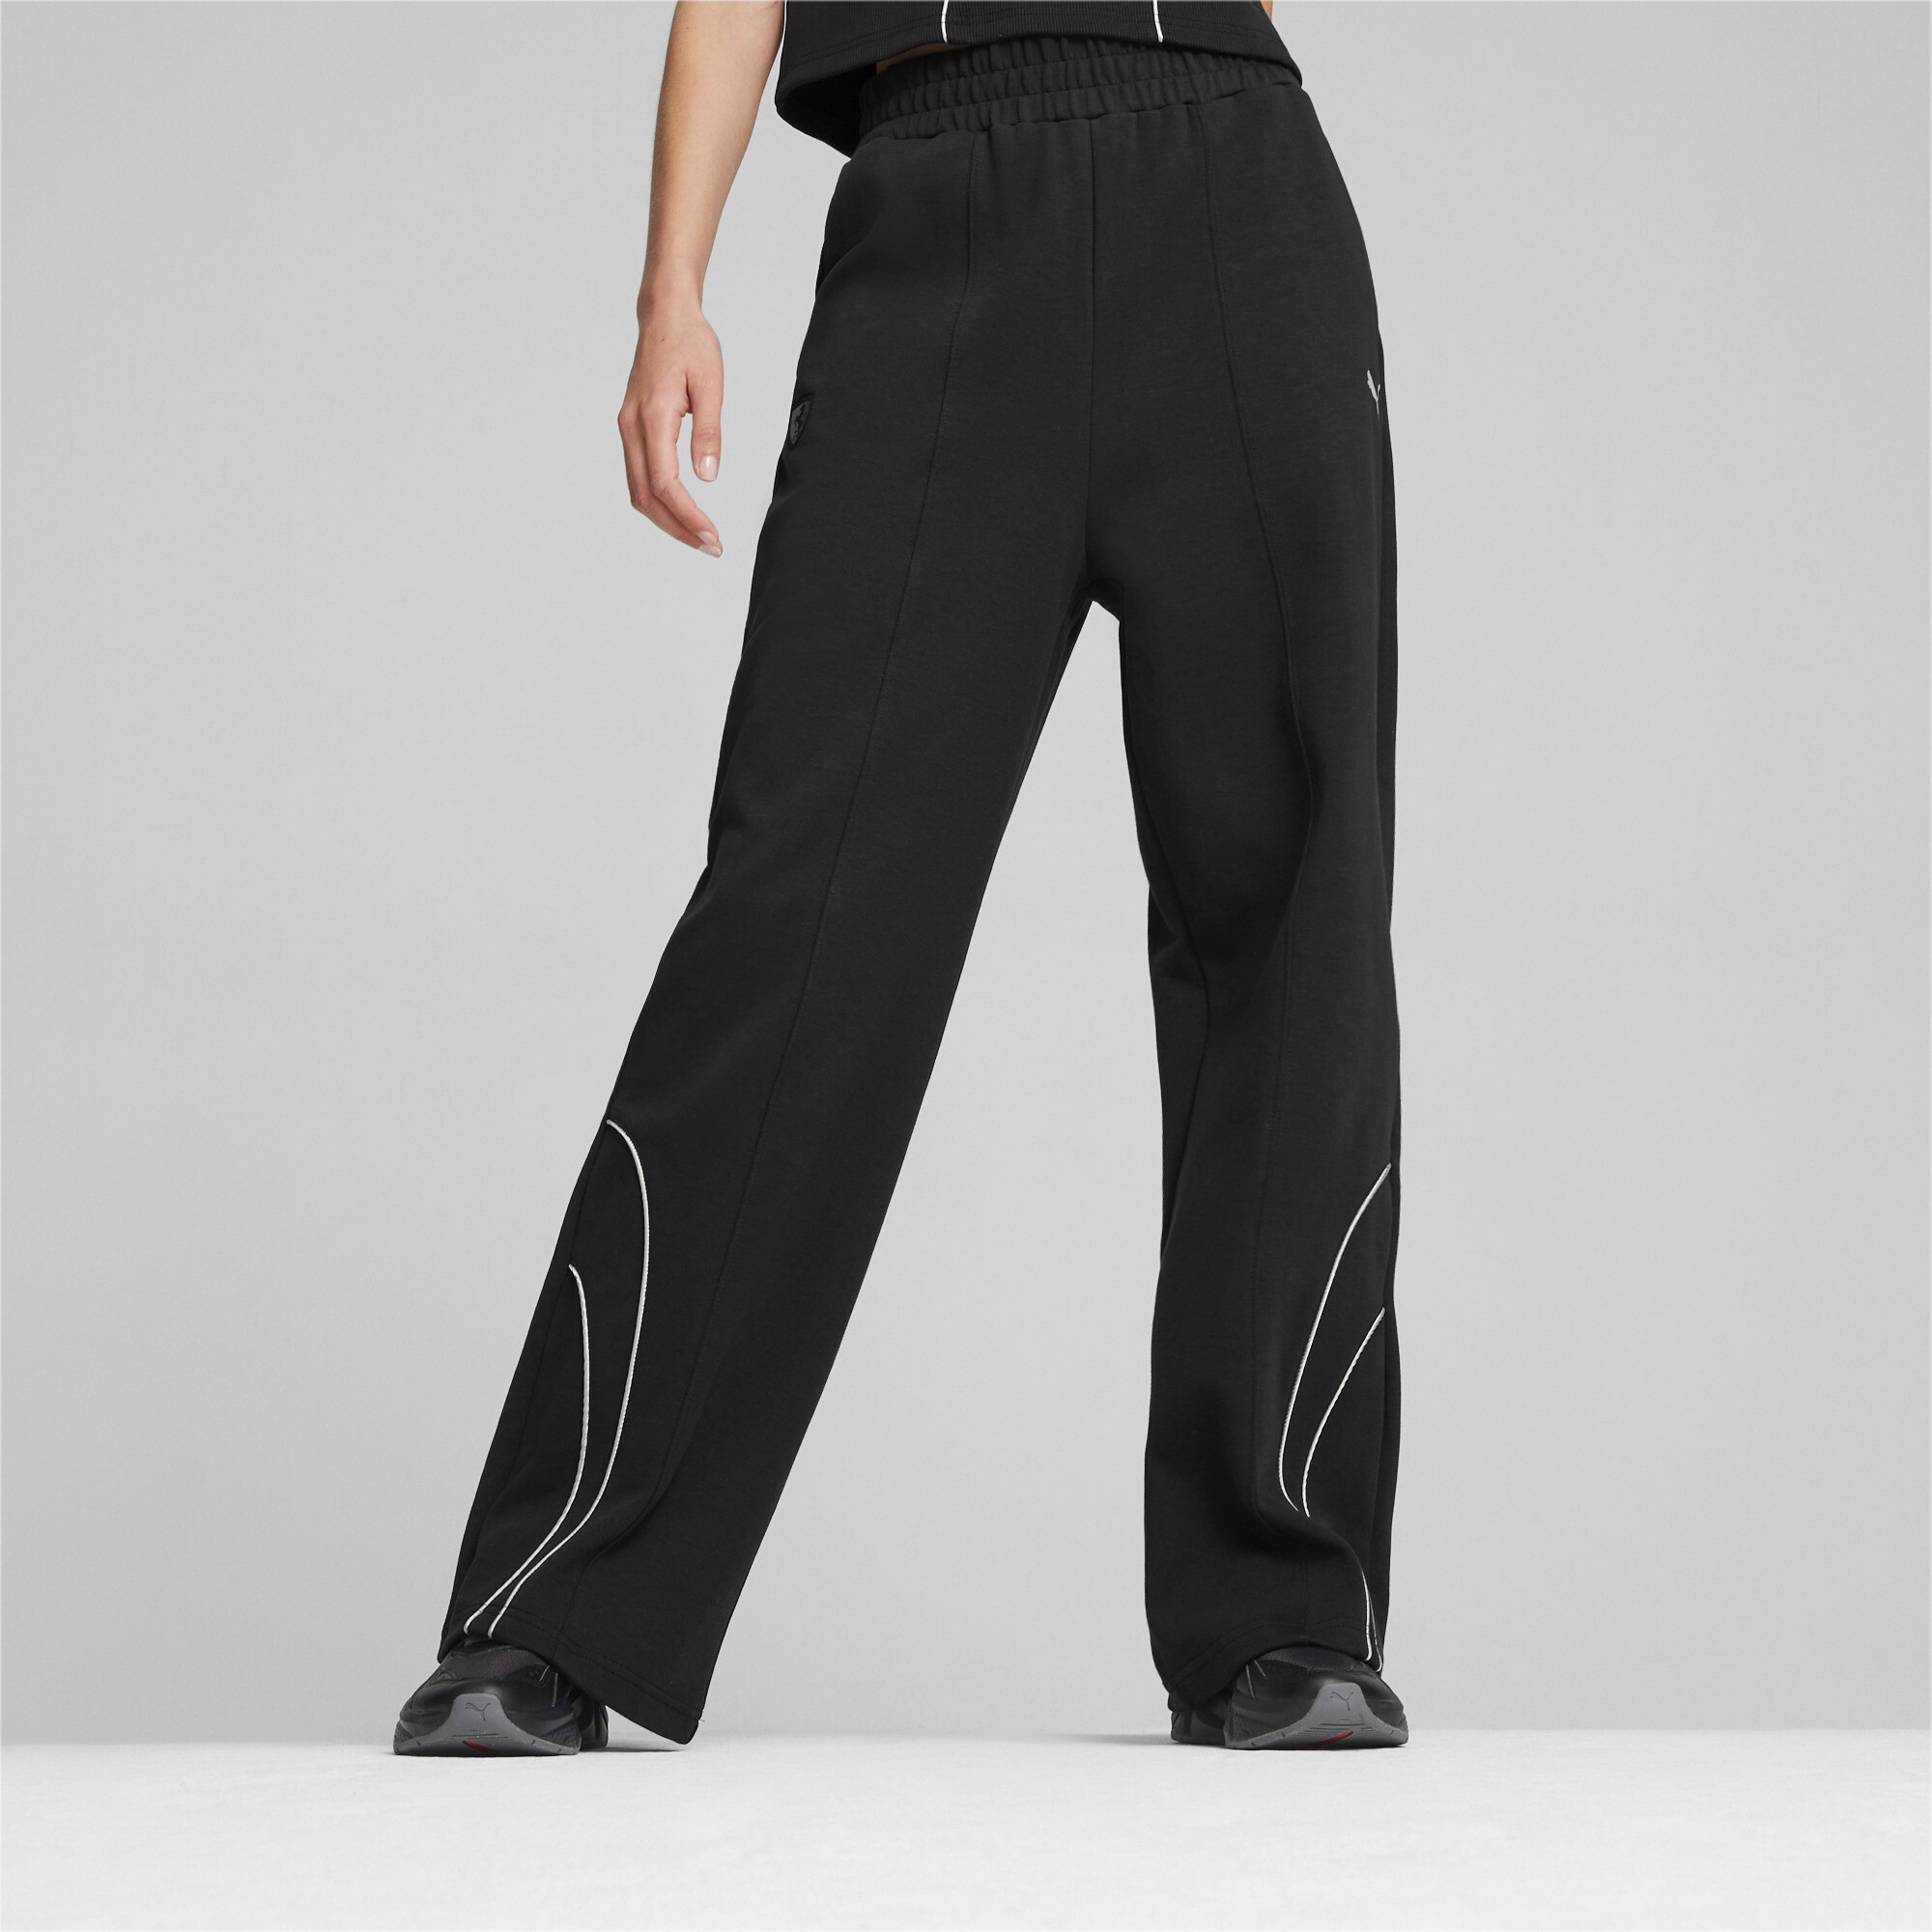 Women's Puma Scuderia Ferrari Style's Motorsport Pants, Black, Size S, Sport